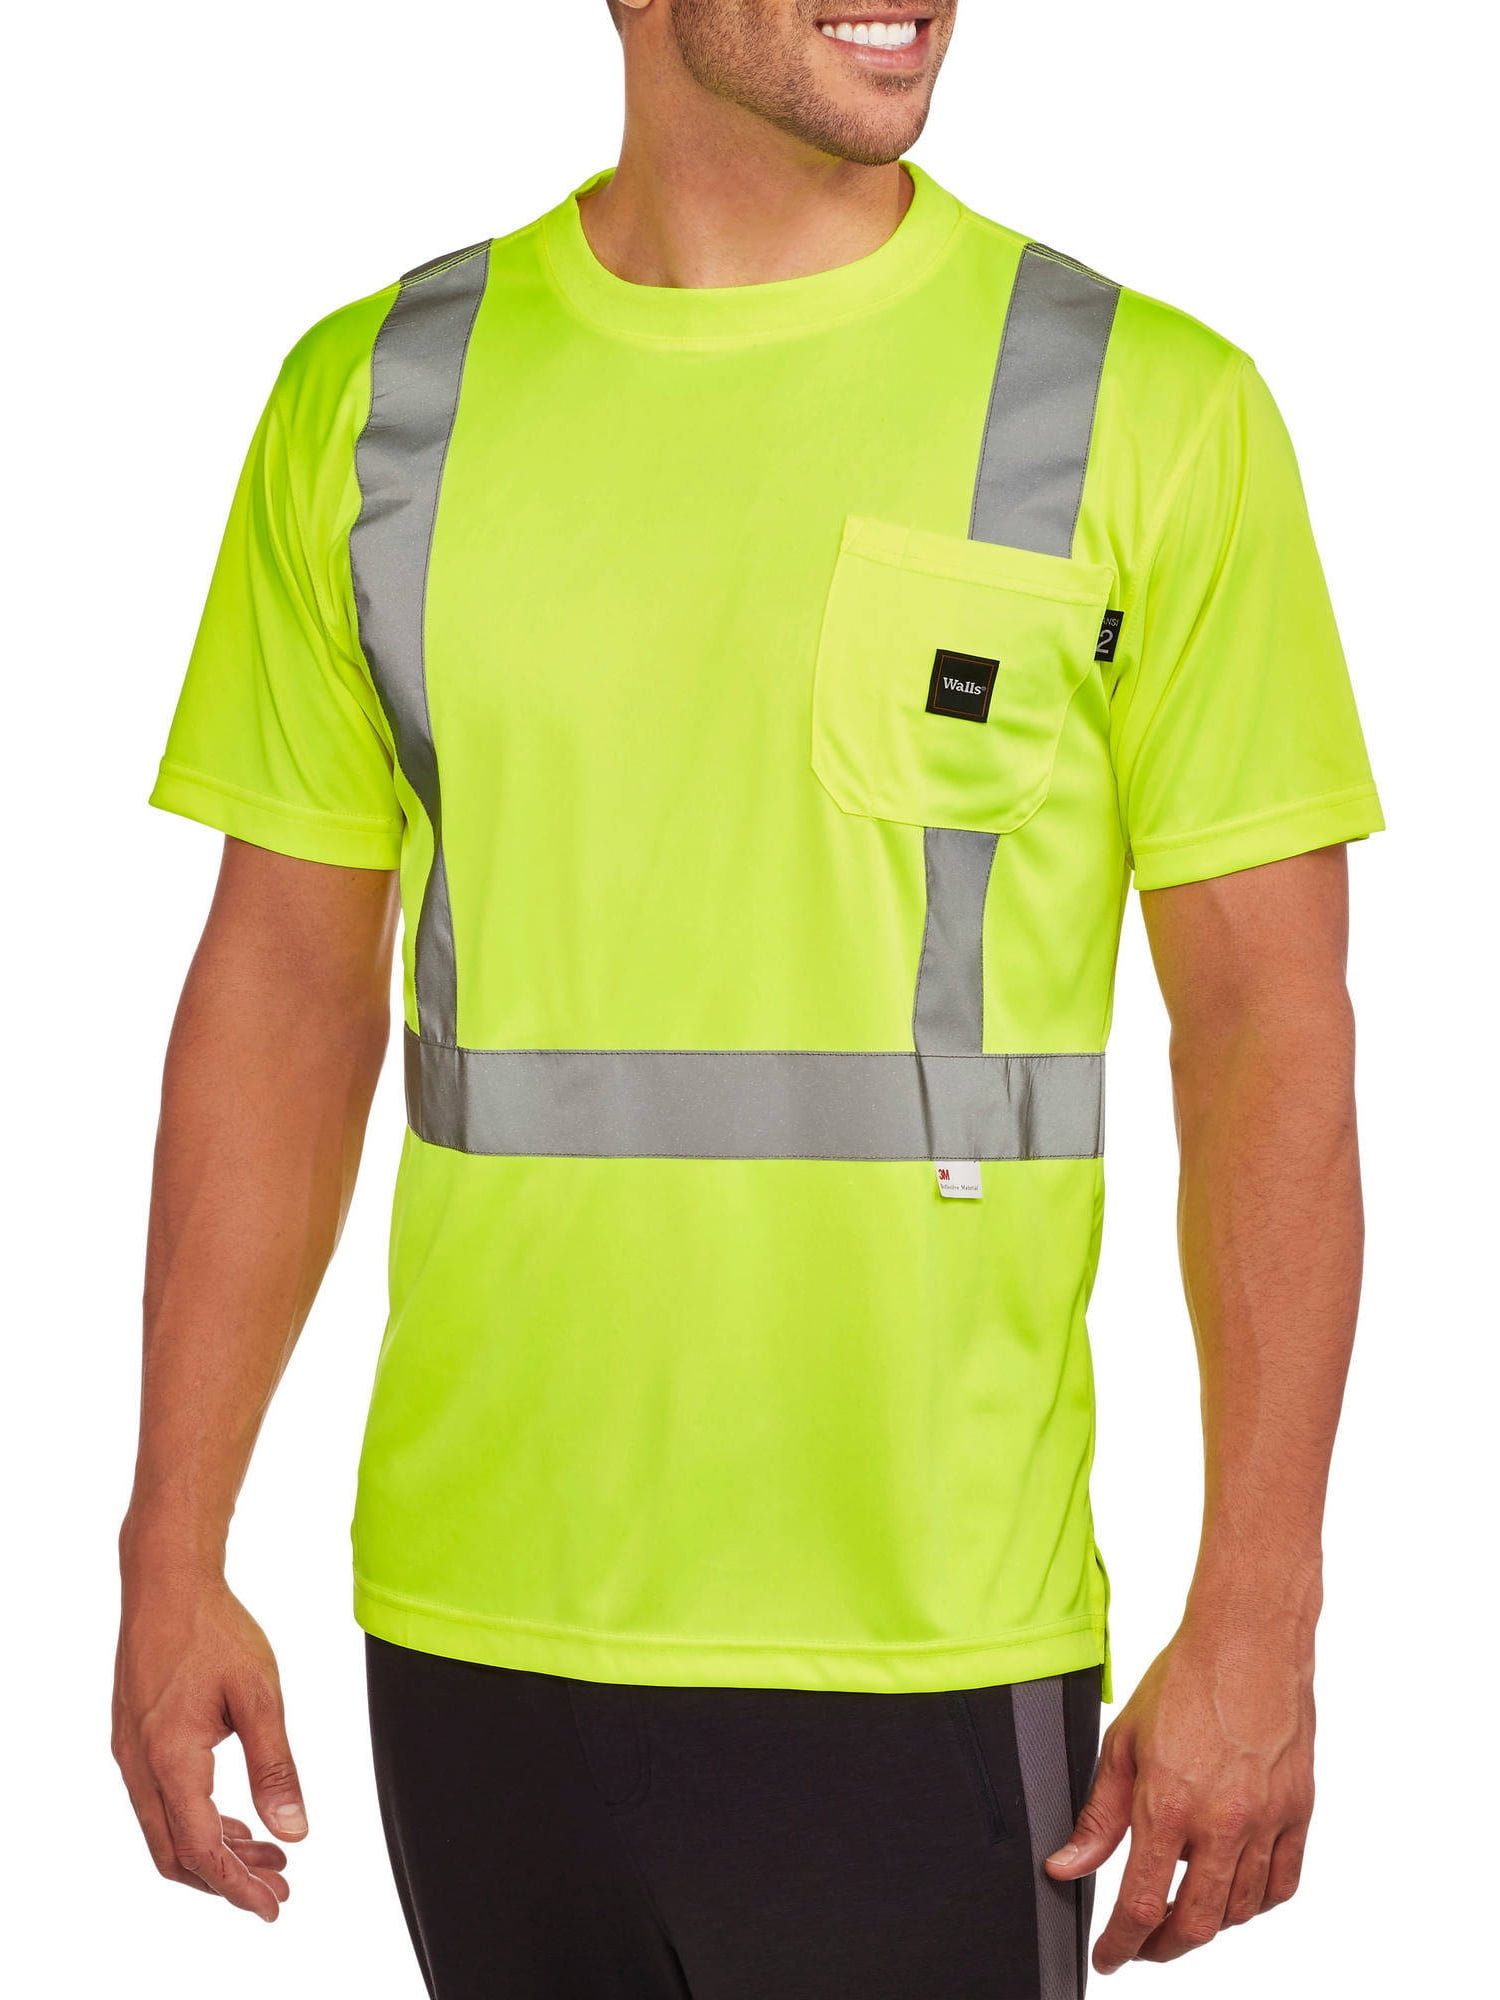 Mens Hi Vis Visibility Top Short Sleeve T Shirt Safety Work Wear Reflective Tape 